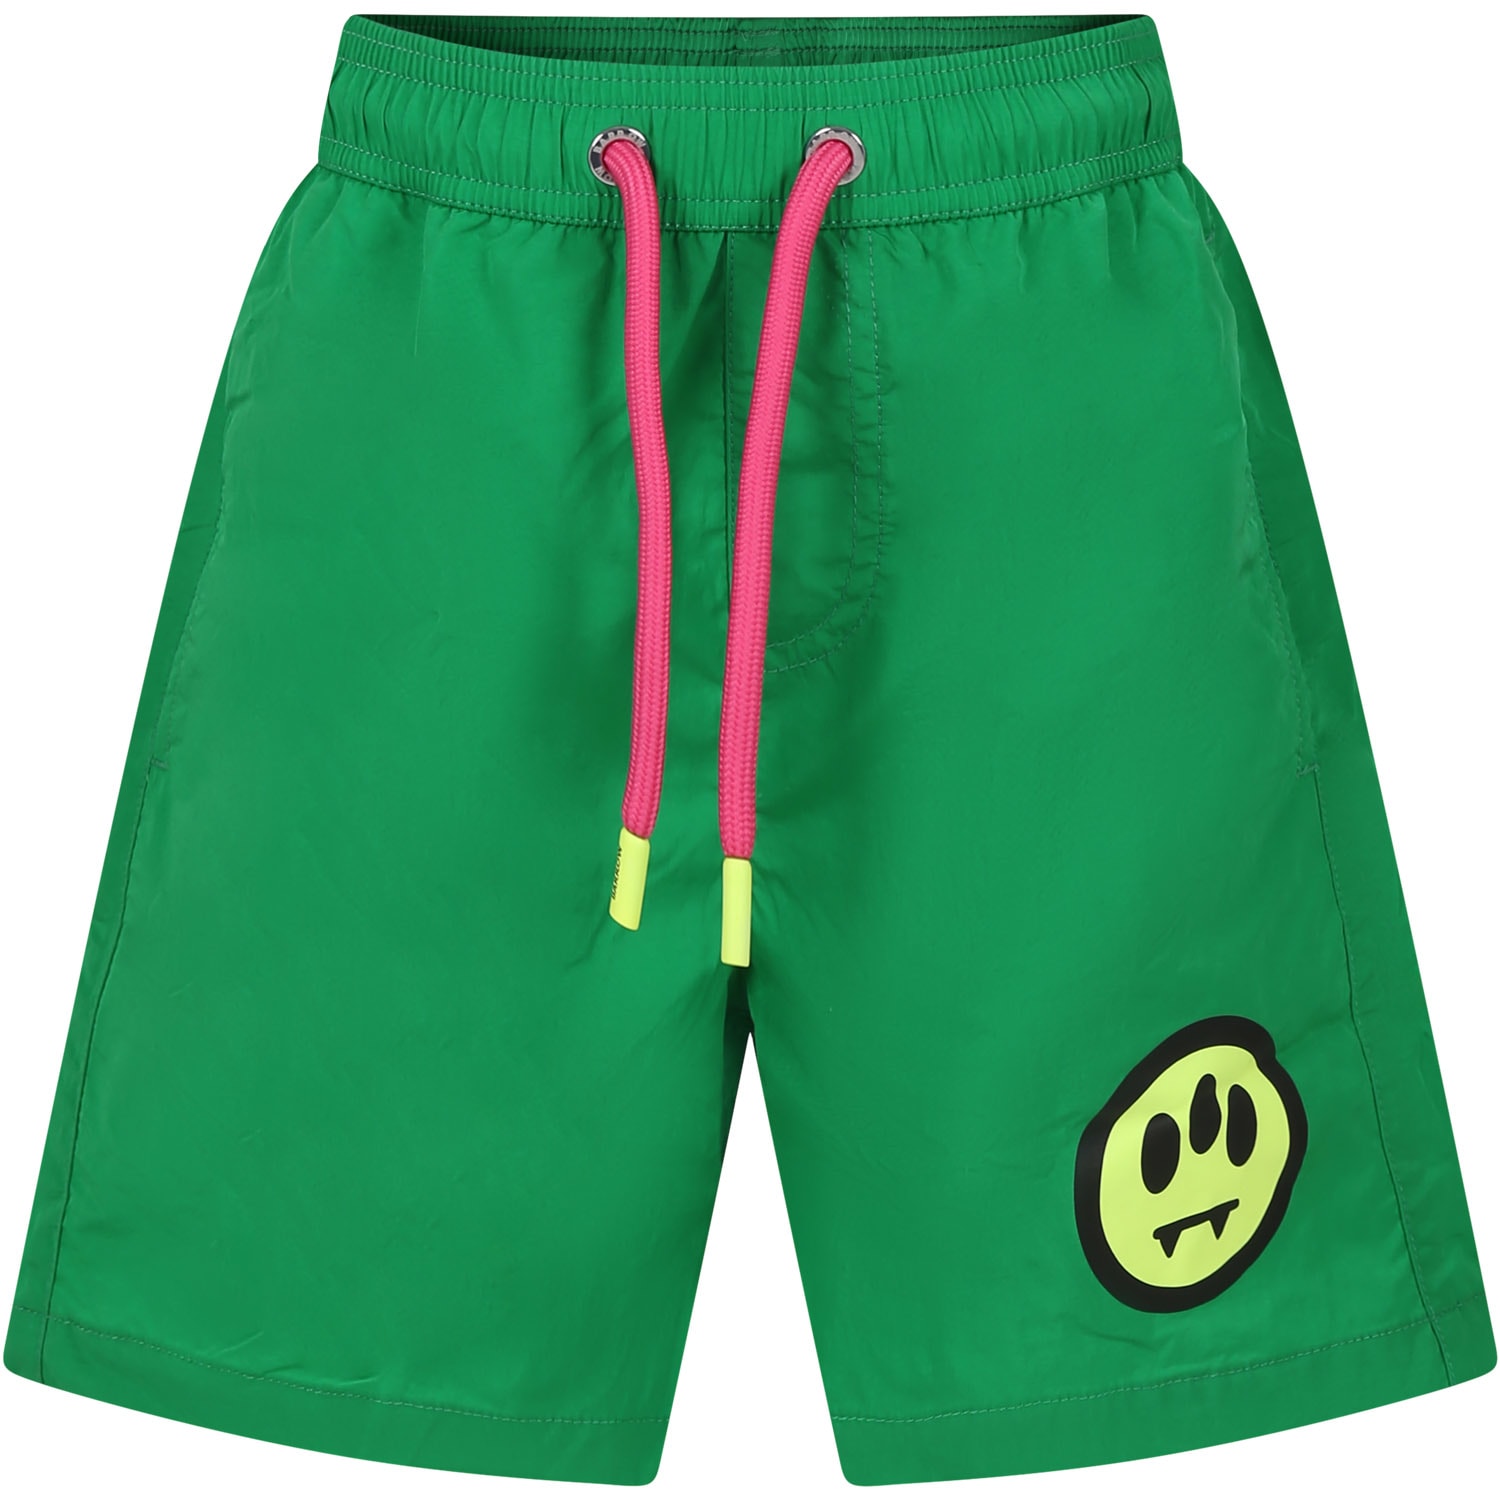 Shop Barrow Green Swim Shorts For Boy With Smiley